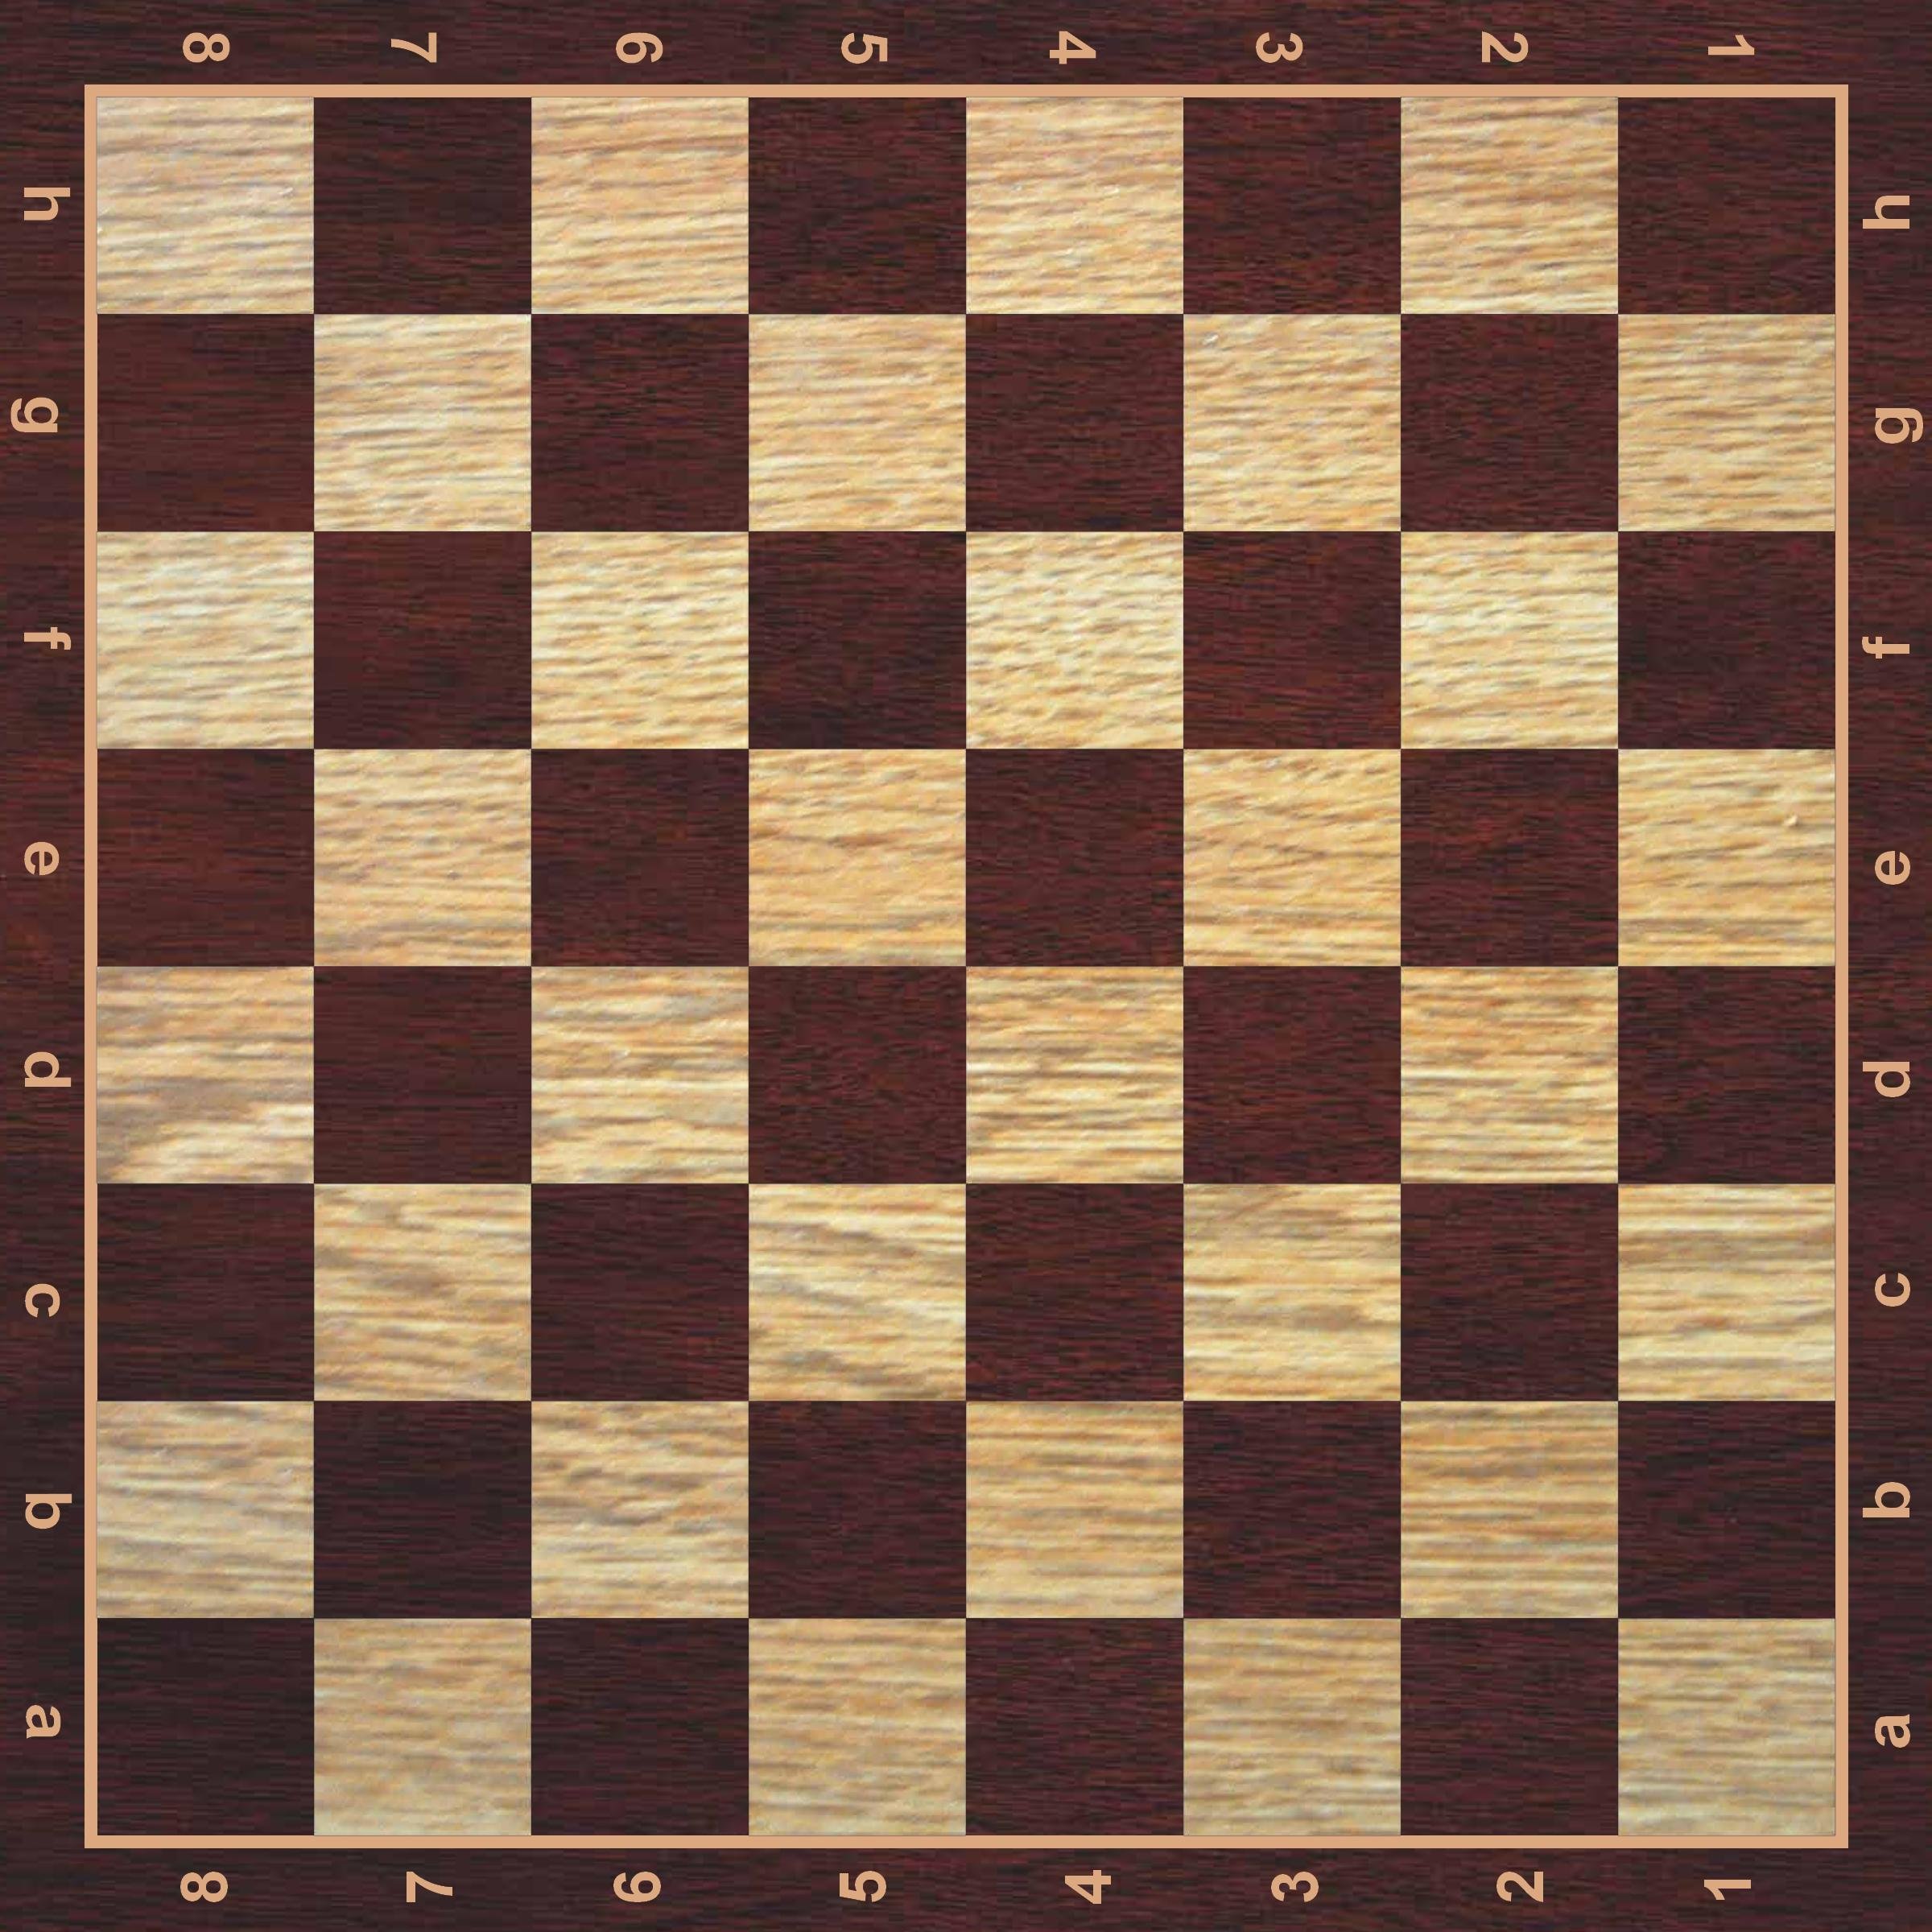 Chessboard. Поле Шахматов. Поле для шашек ин-1829. Shaxmat Shashka. Тони Найдоски шахматы.